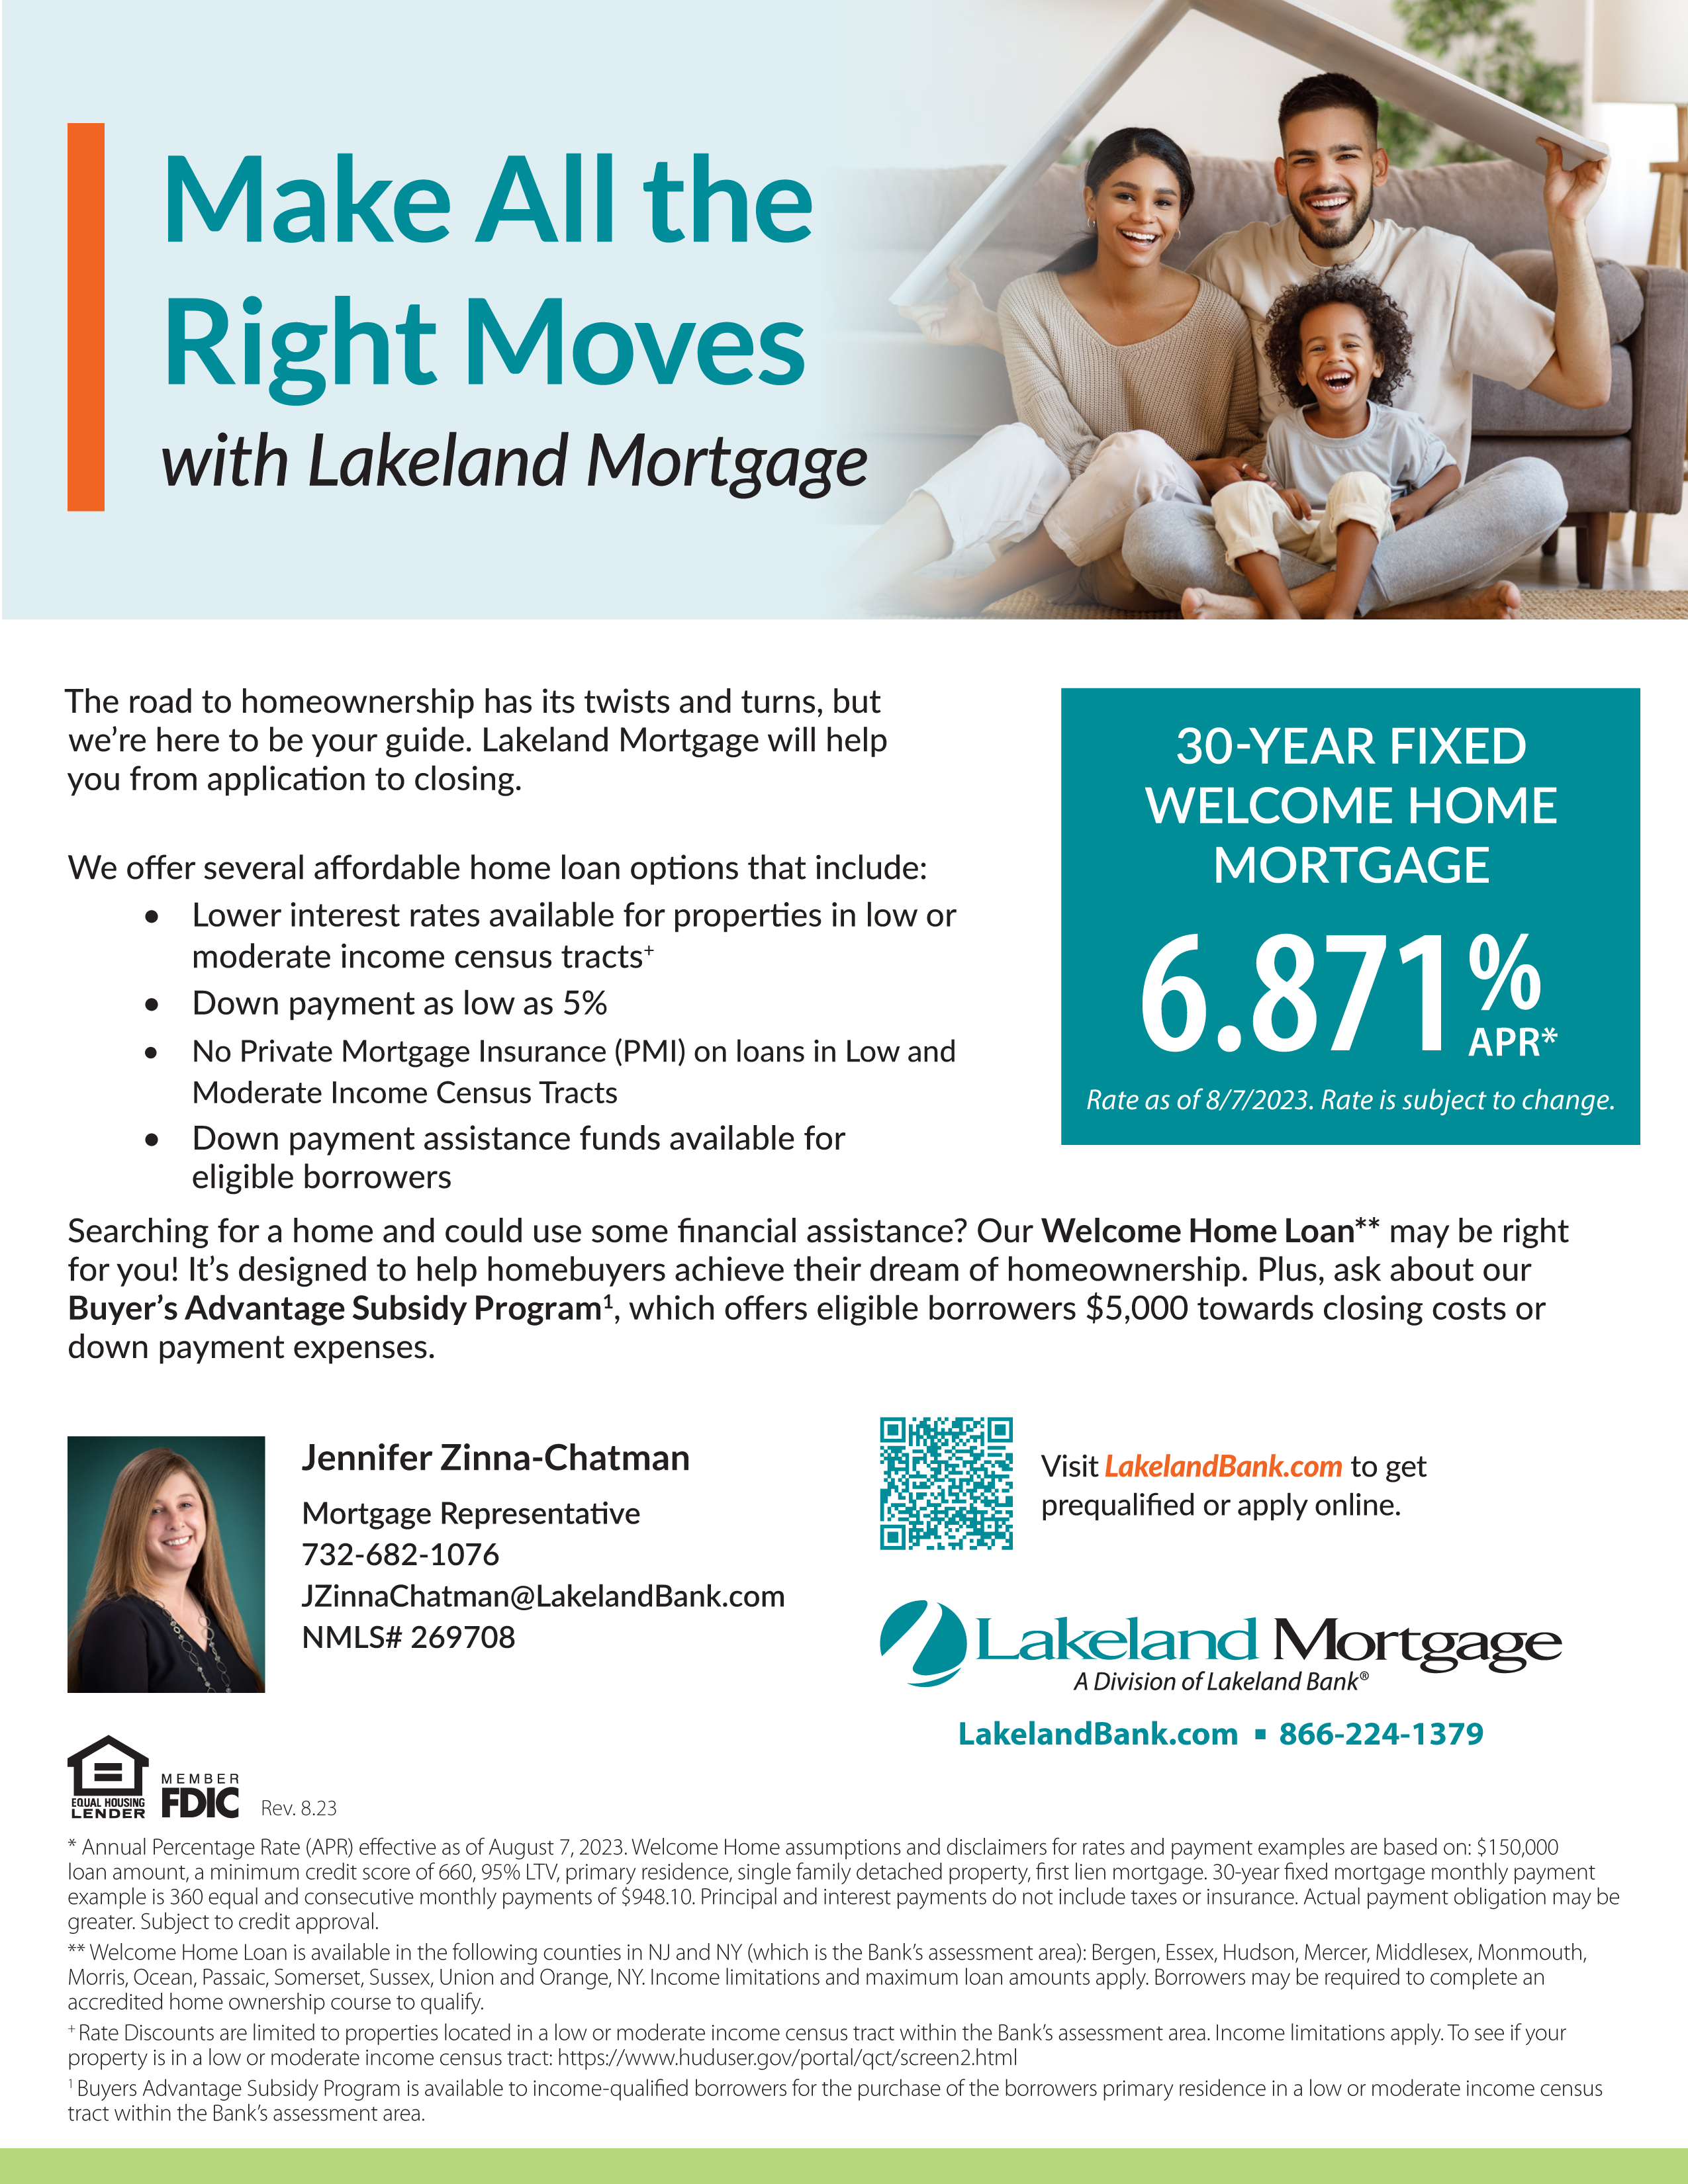 Lakeland Mortgage community advantage loan program_humanities-in-real-estate